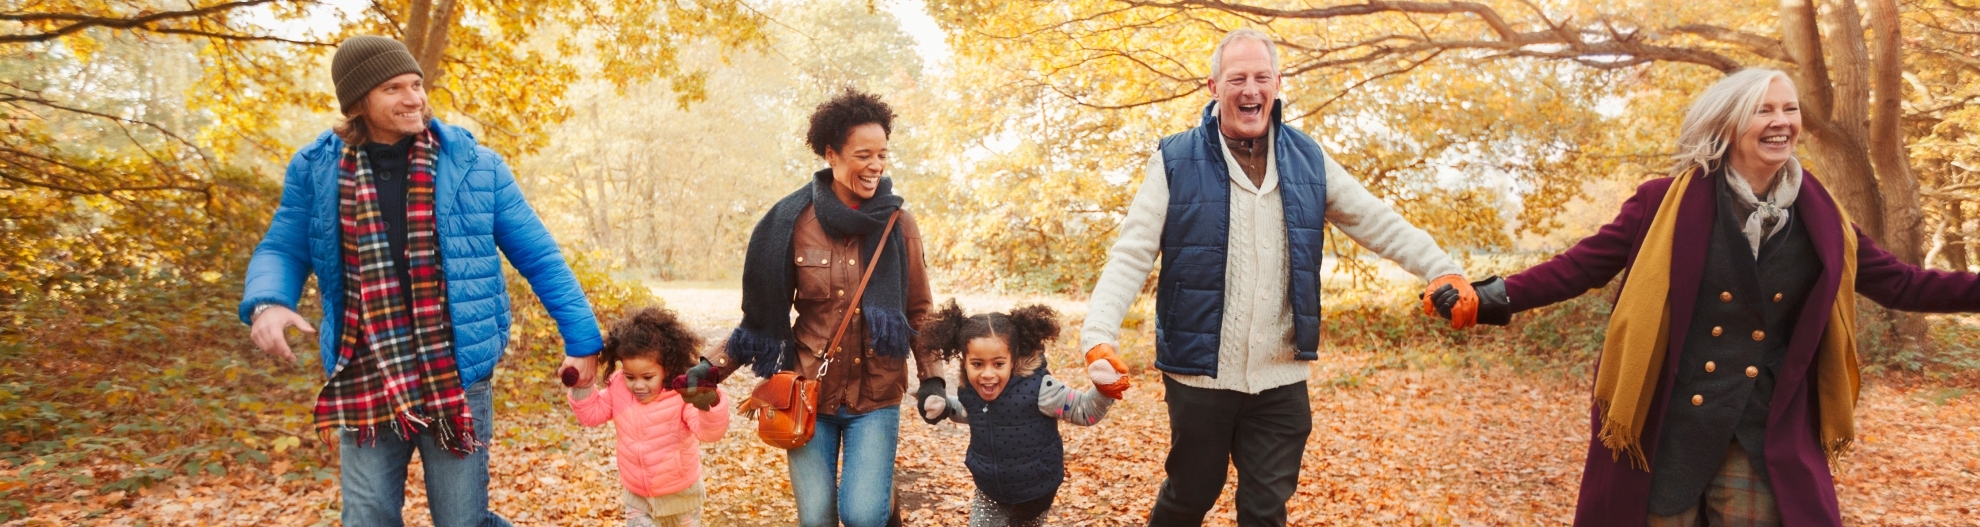 Playful multi-generation family running in autumn park